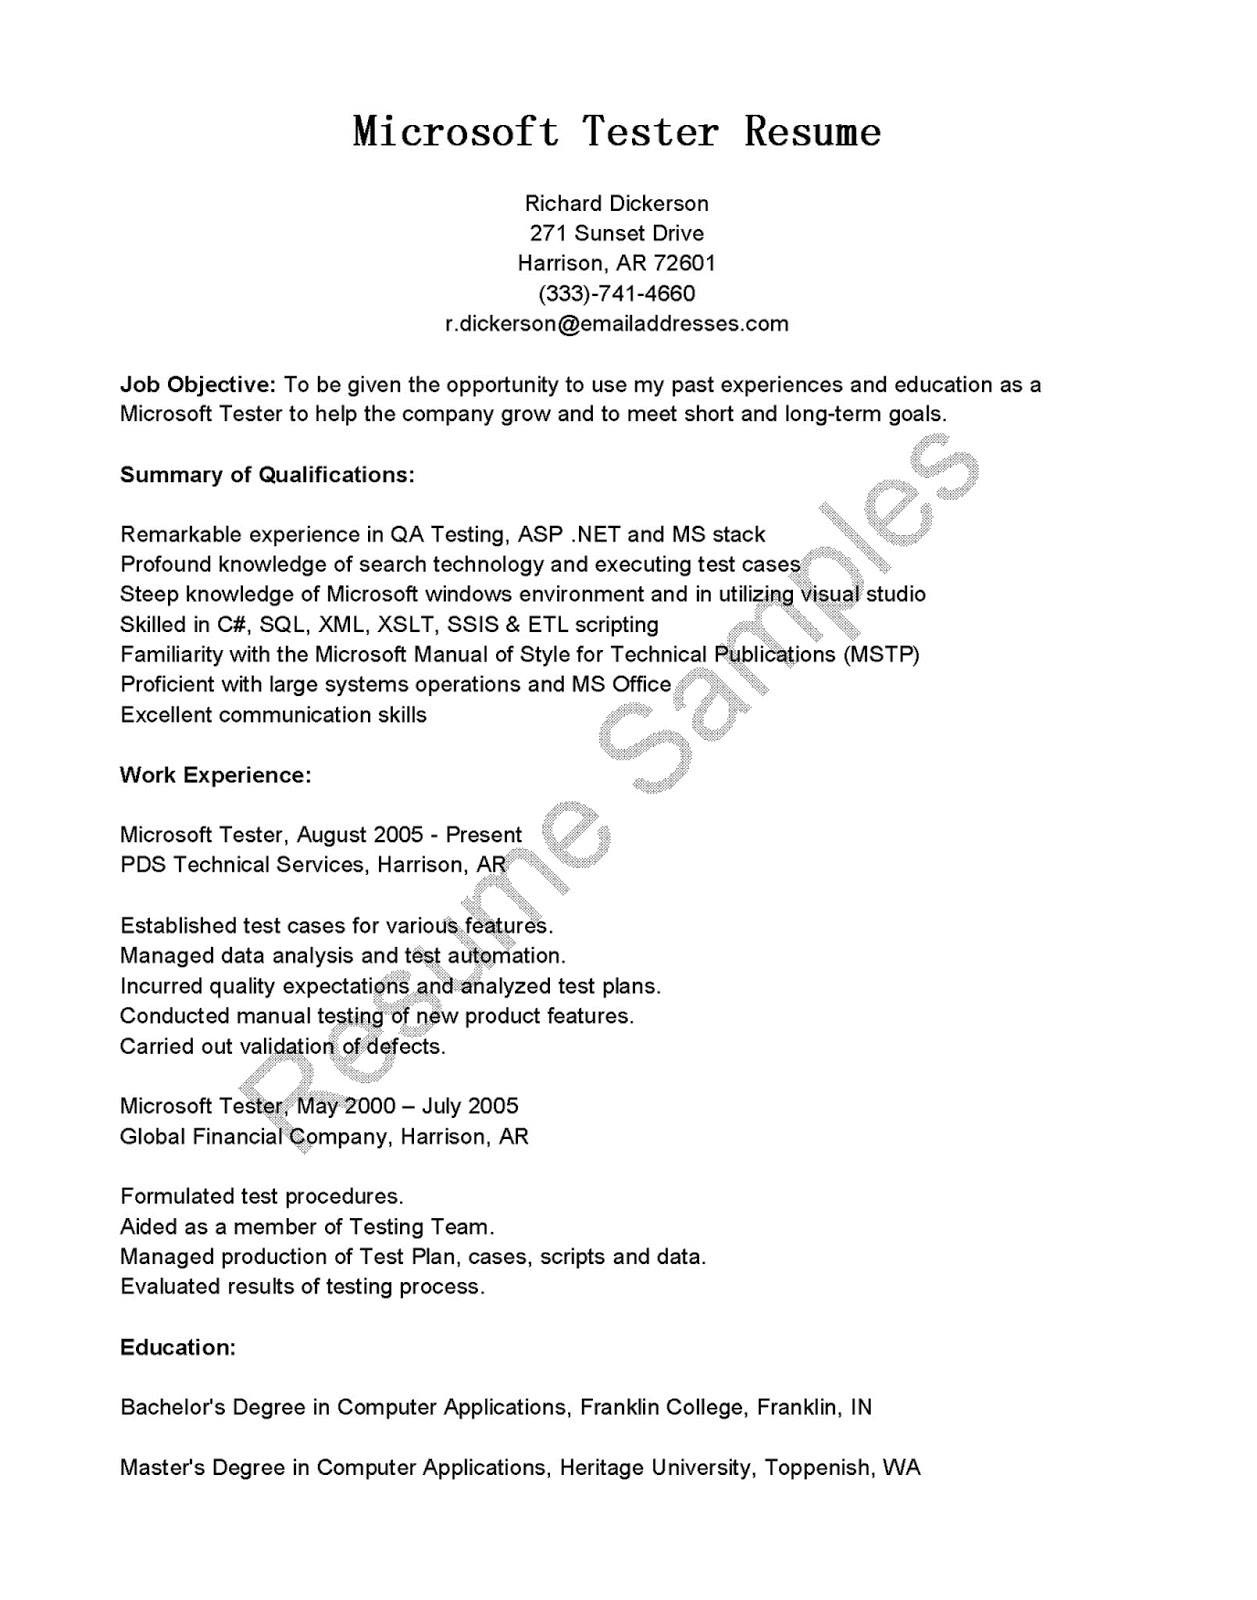 sqa resume sample best of sample resume for software tester fresher awesome sample resume